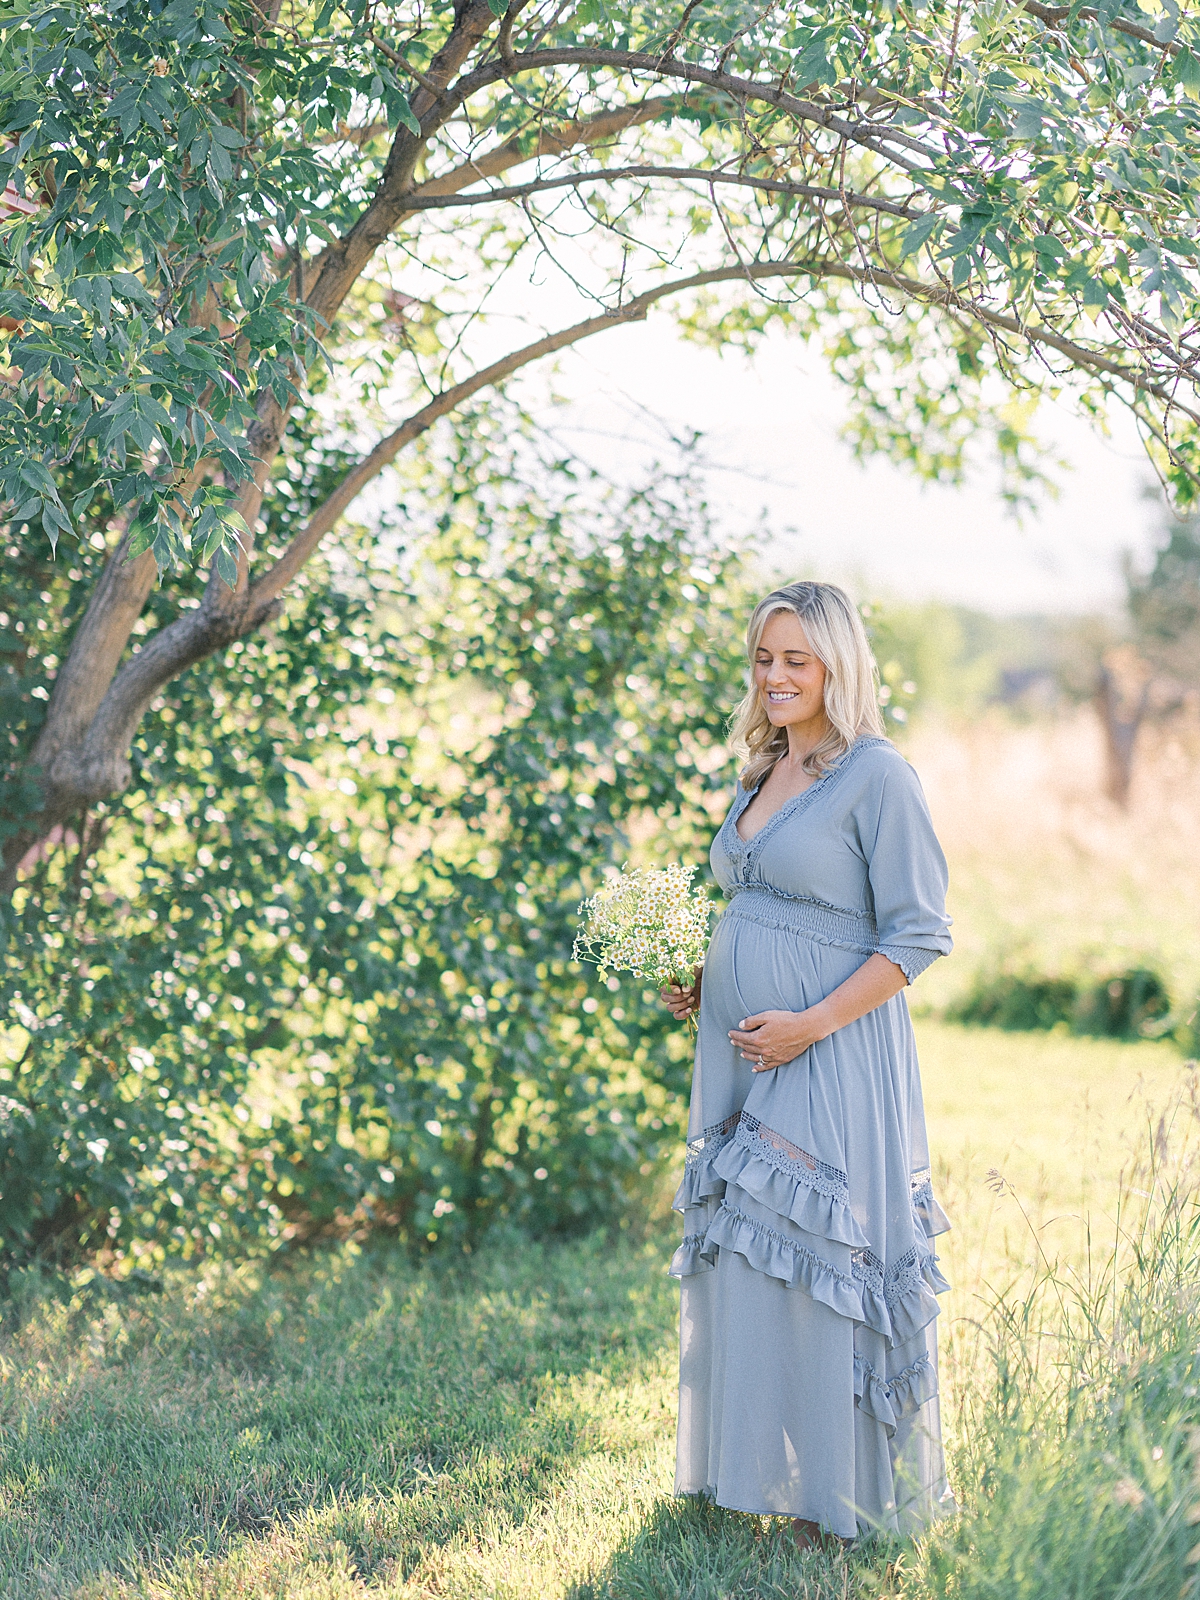 Highlands Ranch maternity photos on film